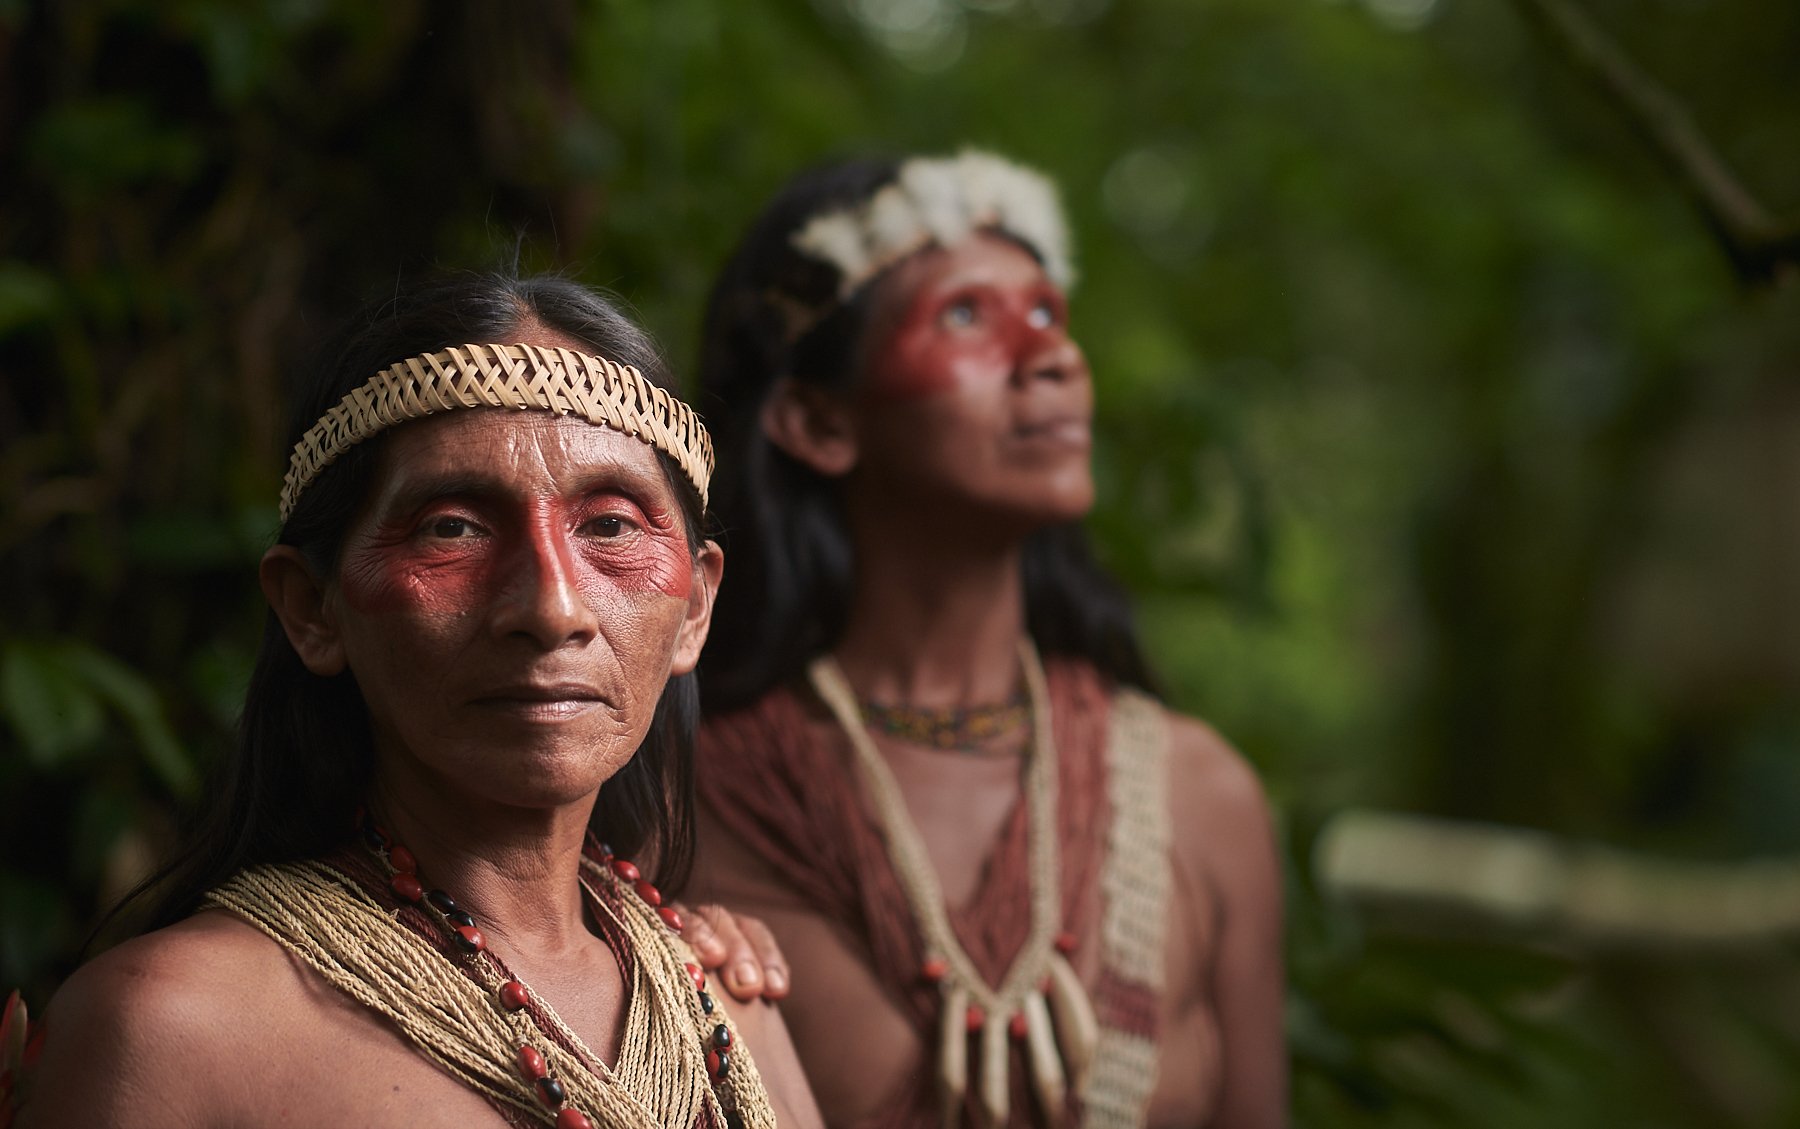 Wuani (front) and Waika (back), two senior Huaorani women